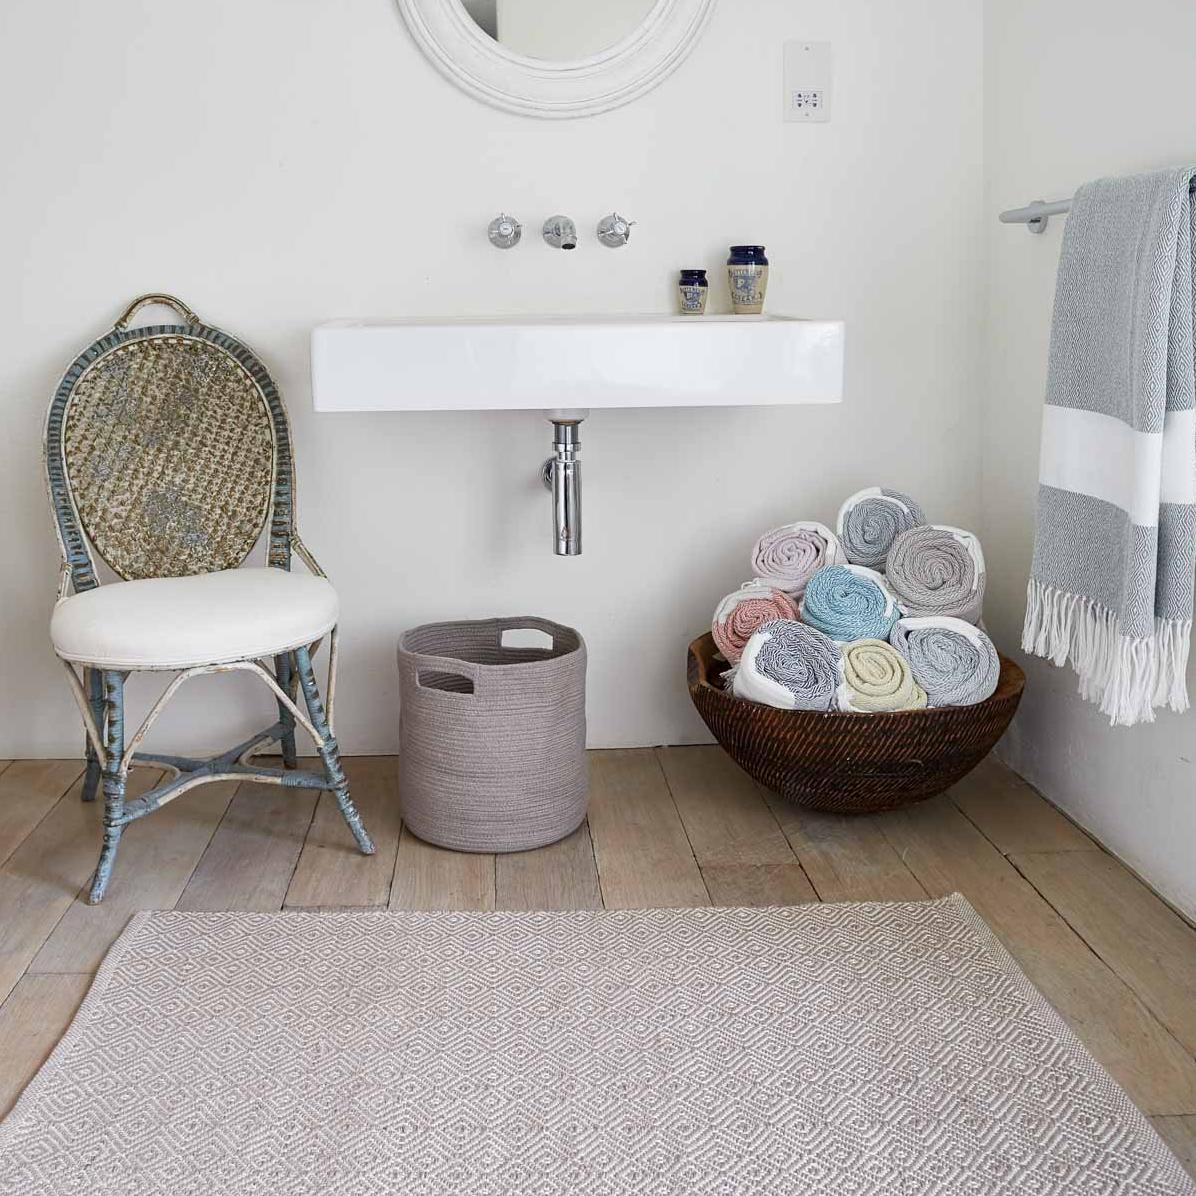 dormouse diamond bathroom rug with chair and Weaver Green Hammam Throws